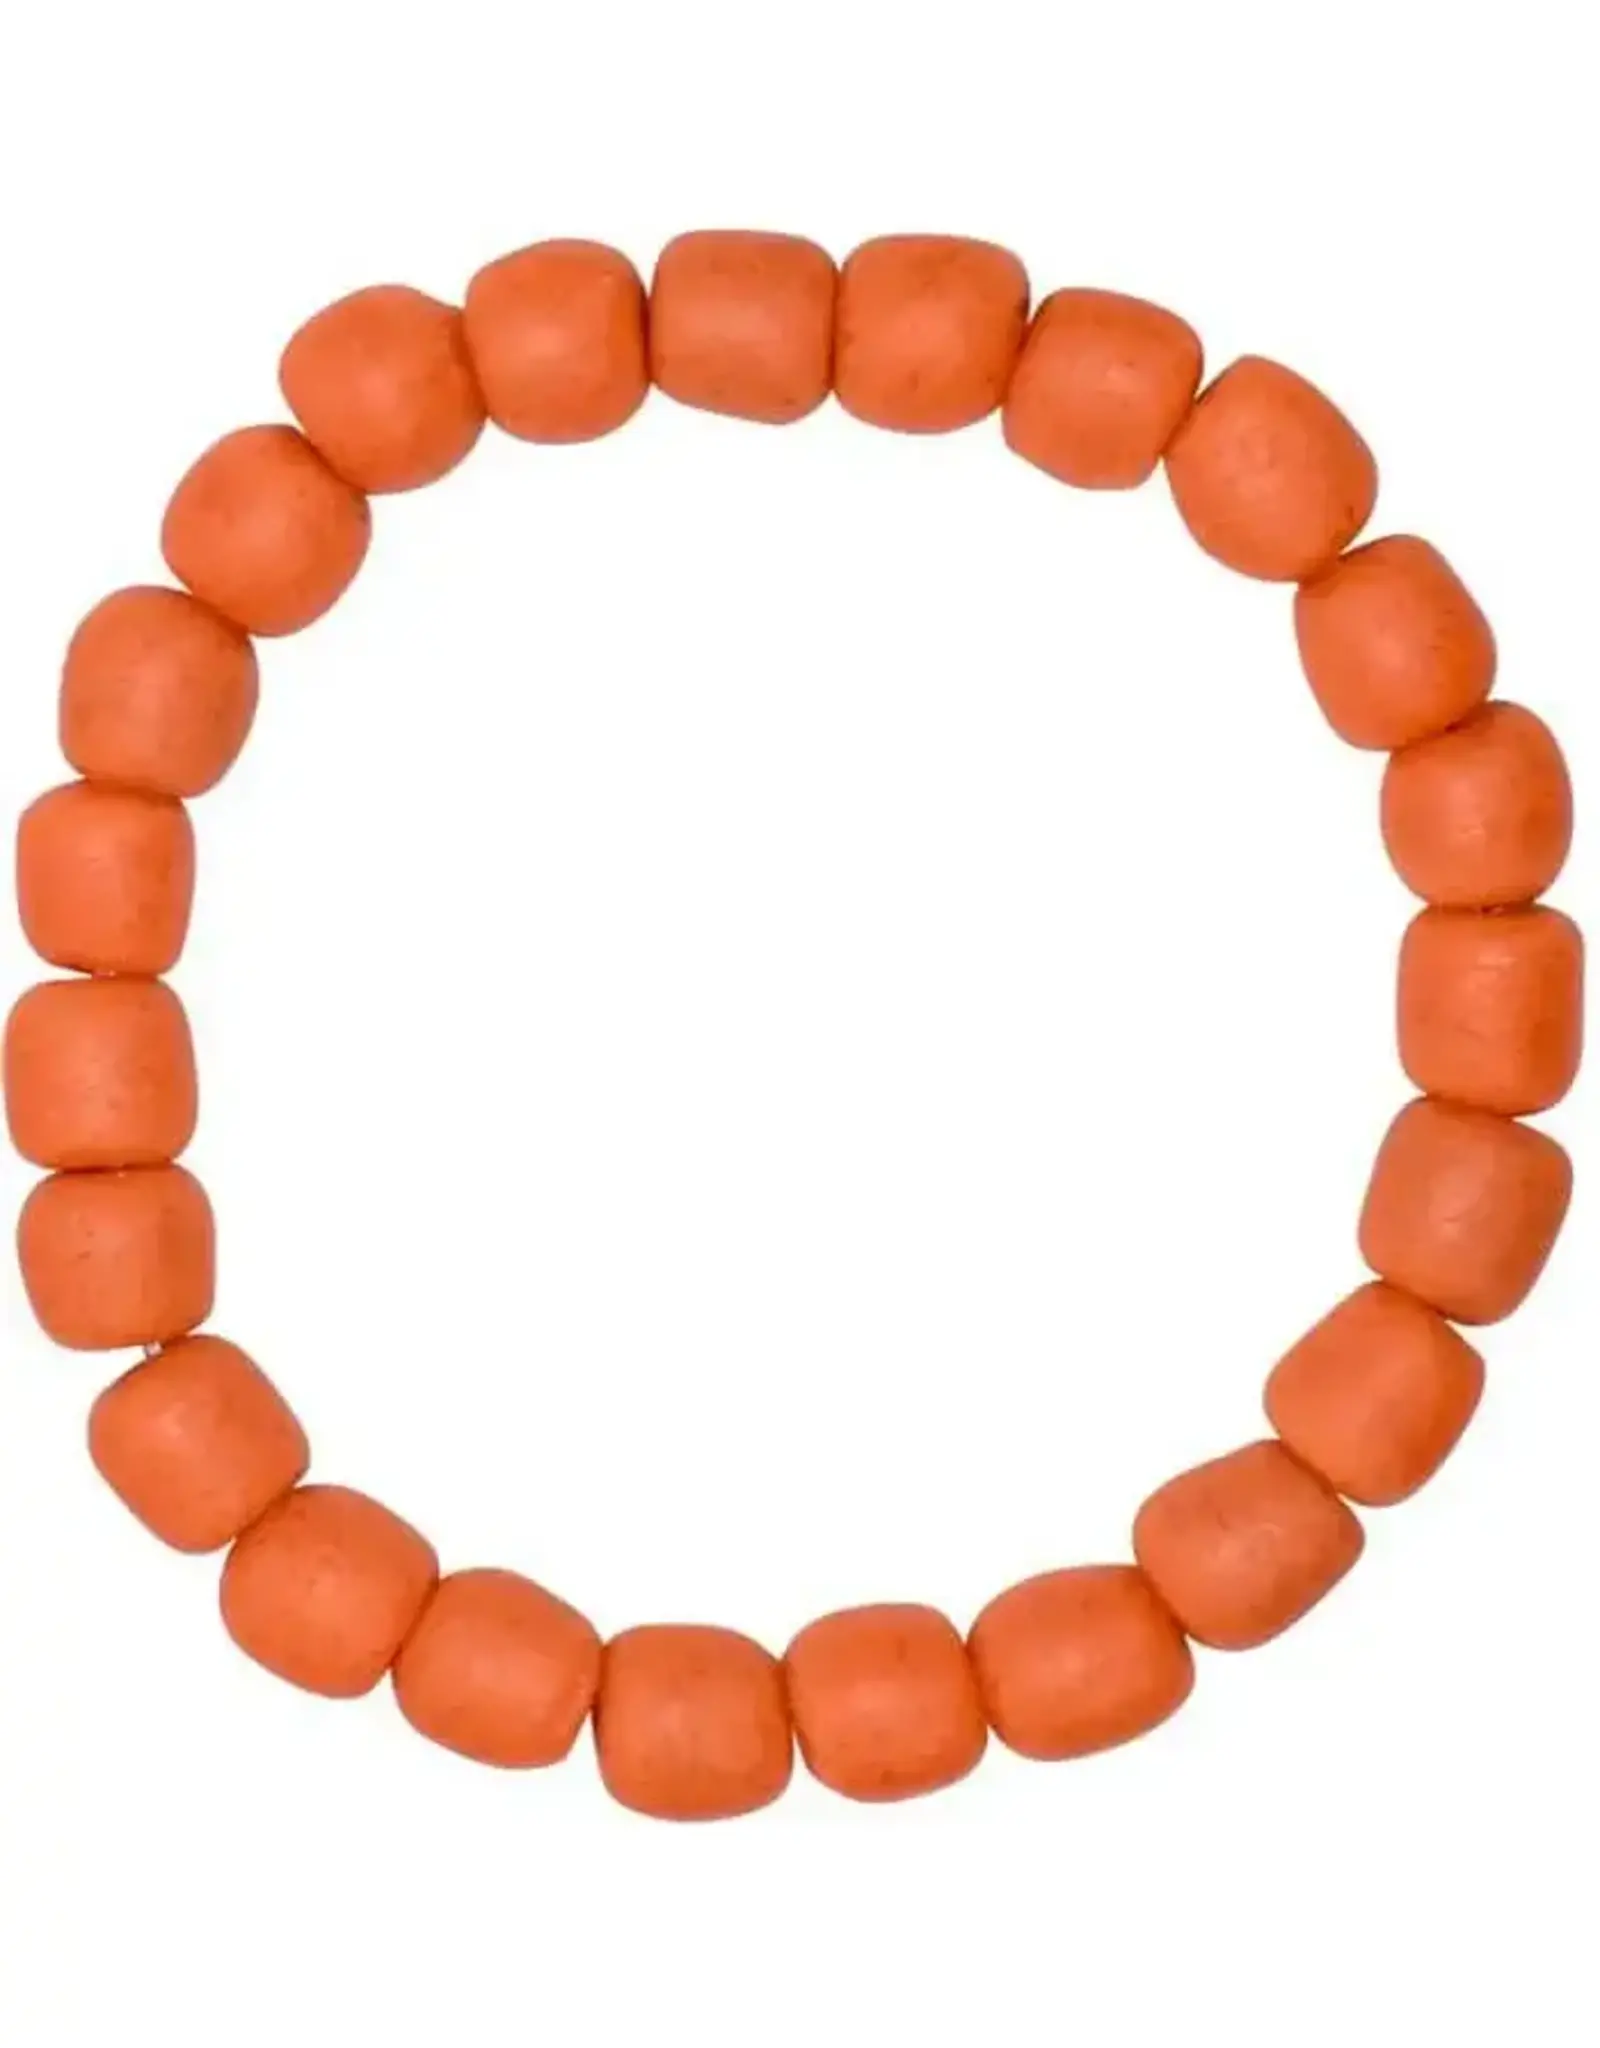 Global Mamas Tangerine Recycled Glass Bracelet